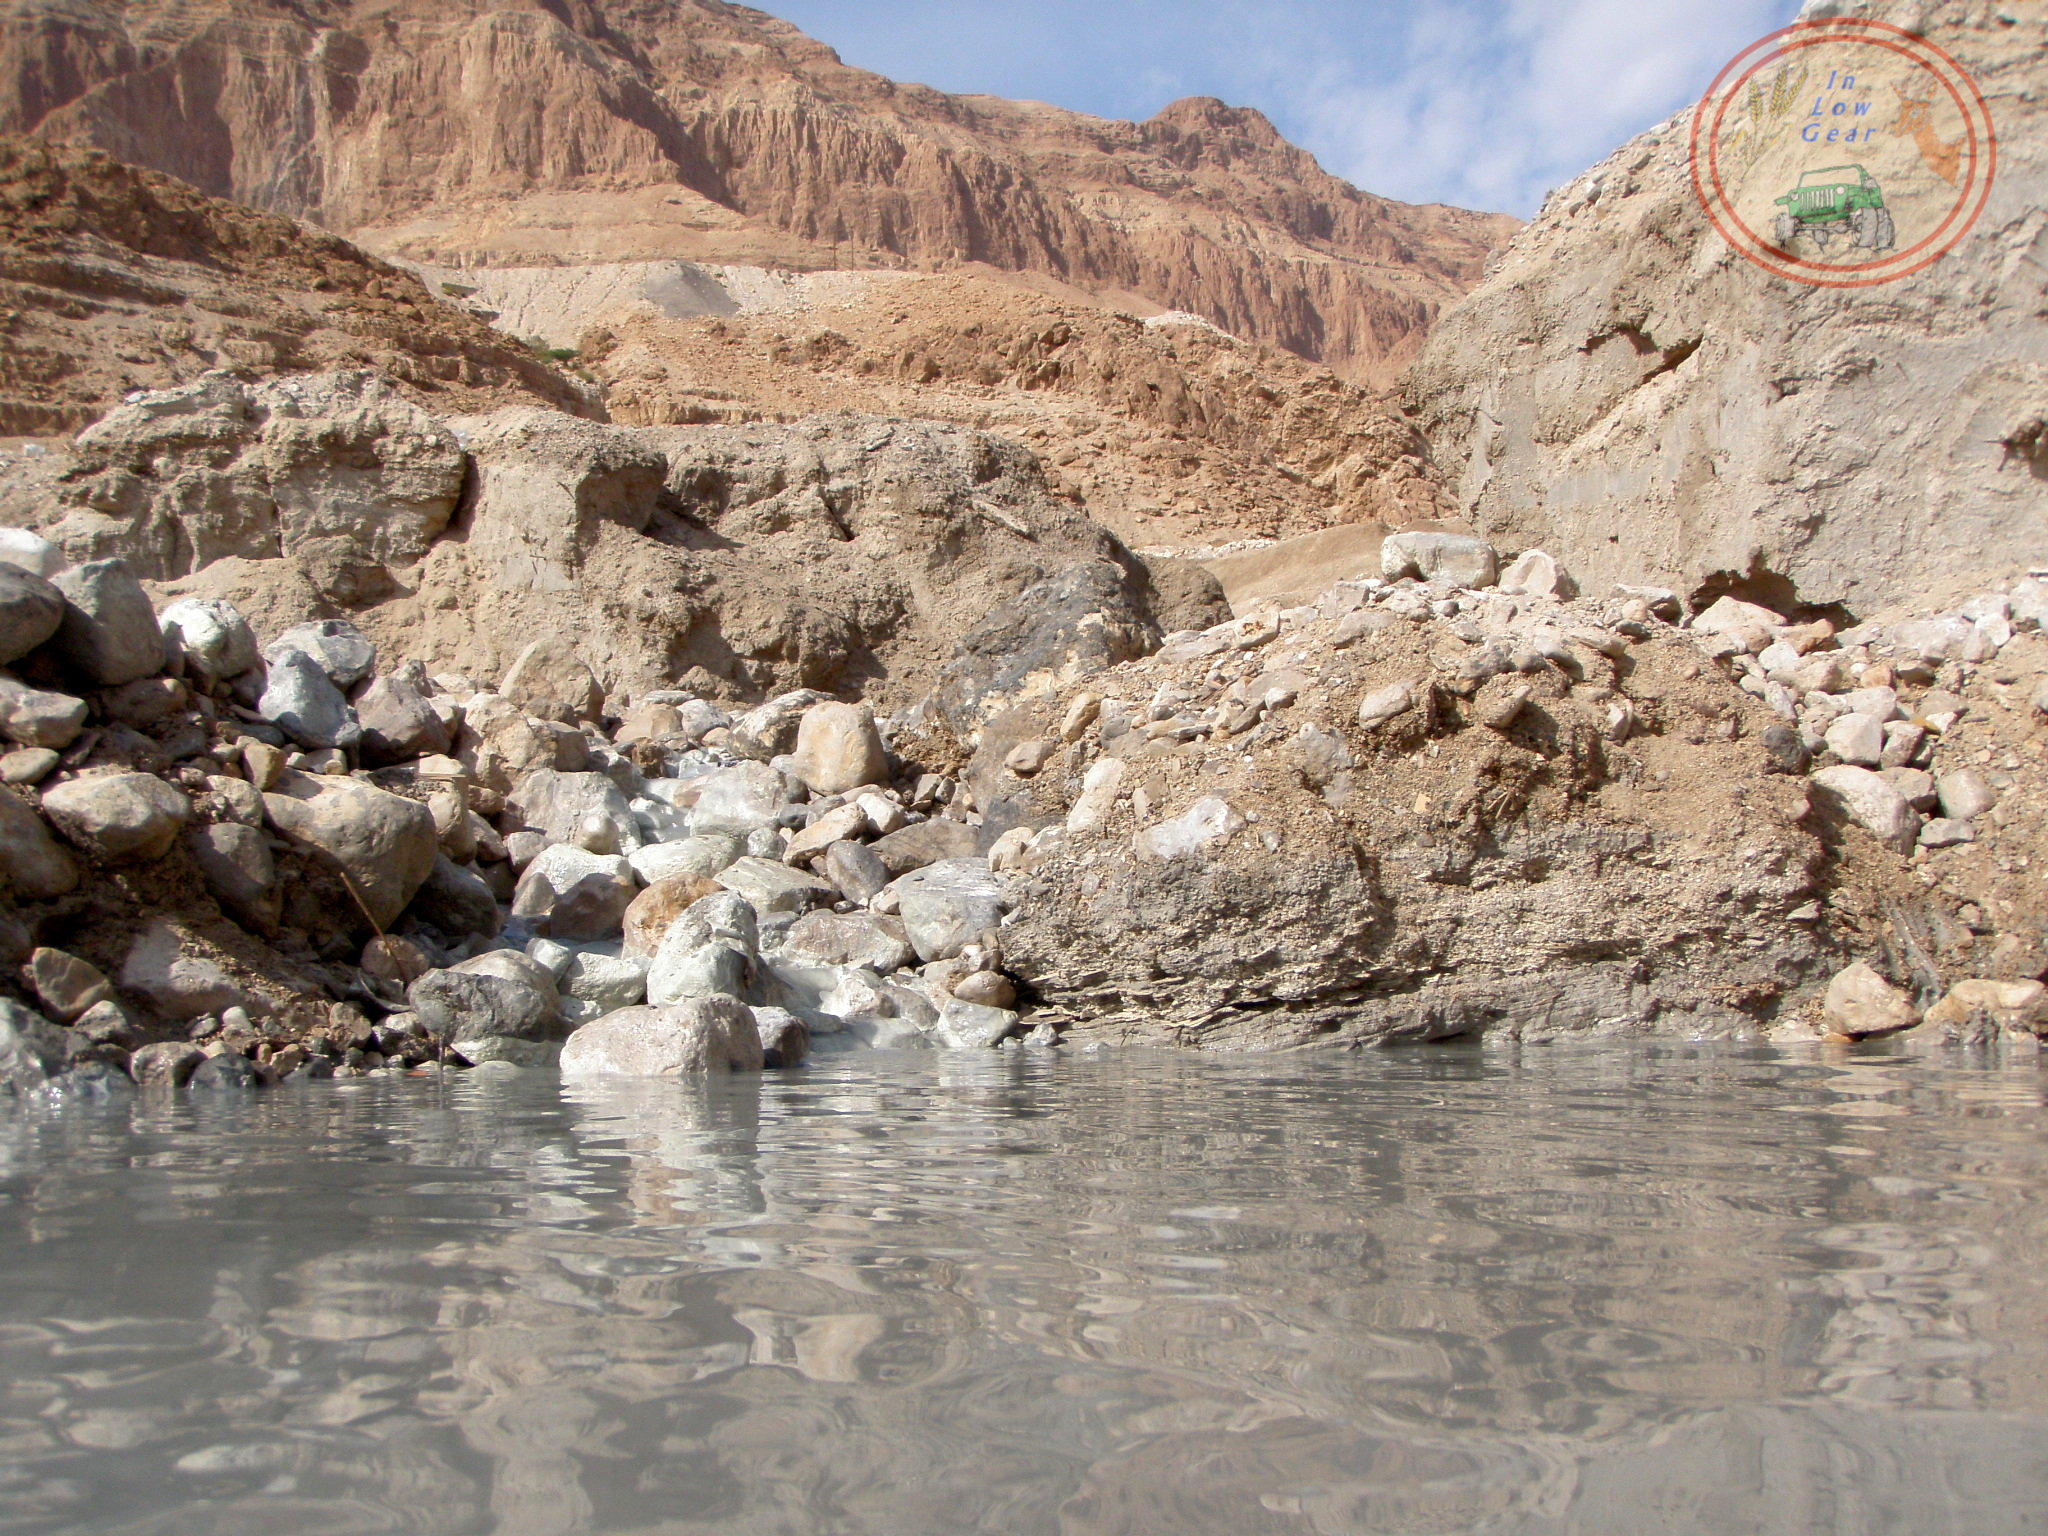 Dead Sea Hot Springs Sinkholes adventure jeep tours